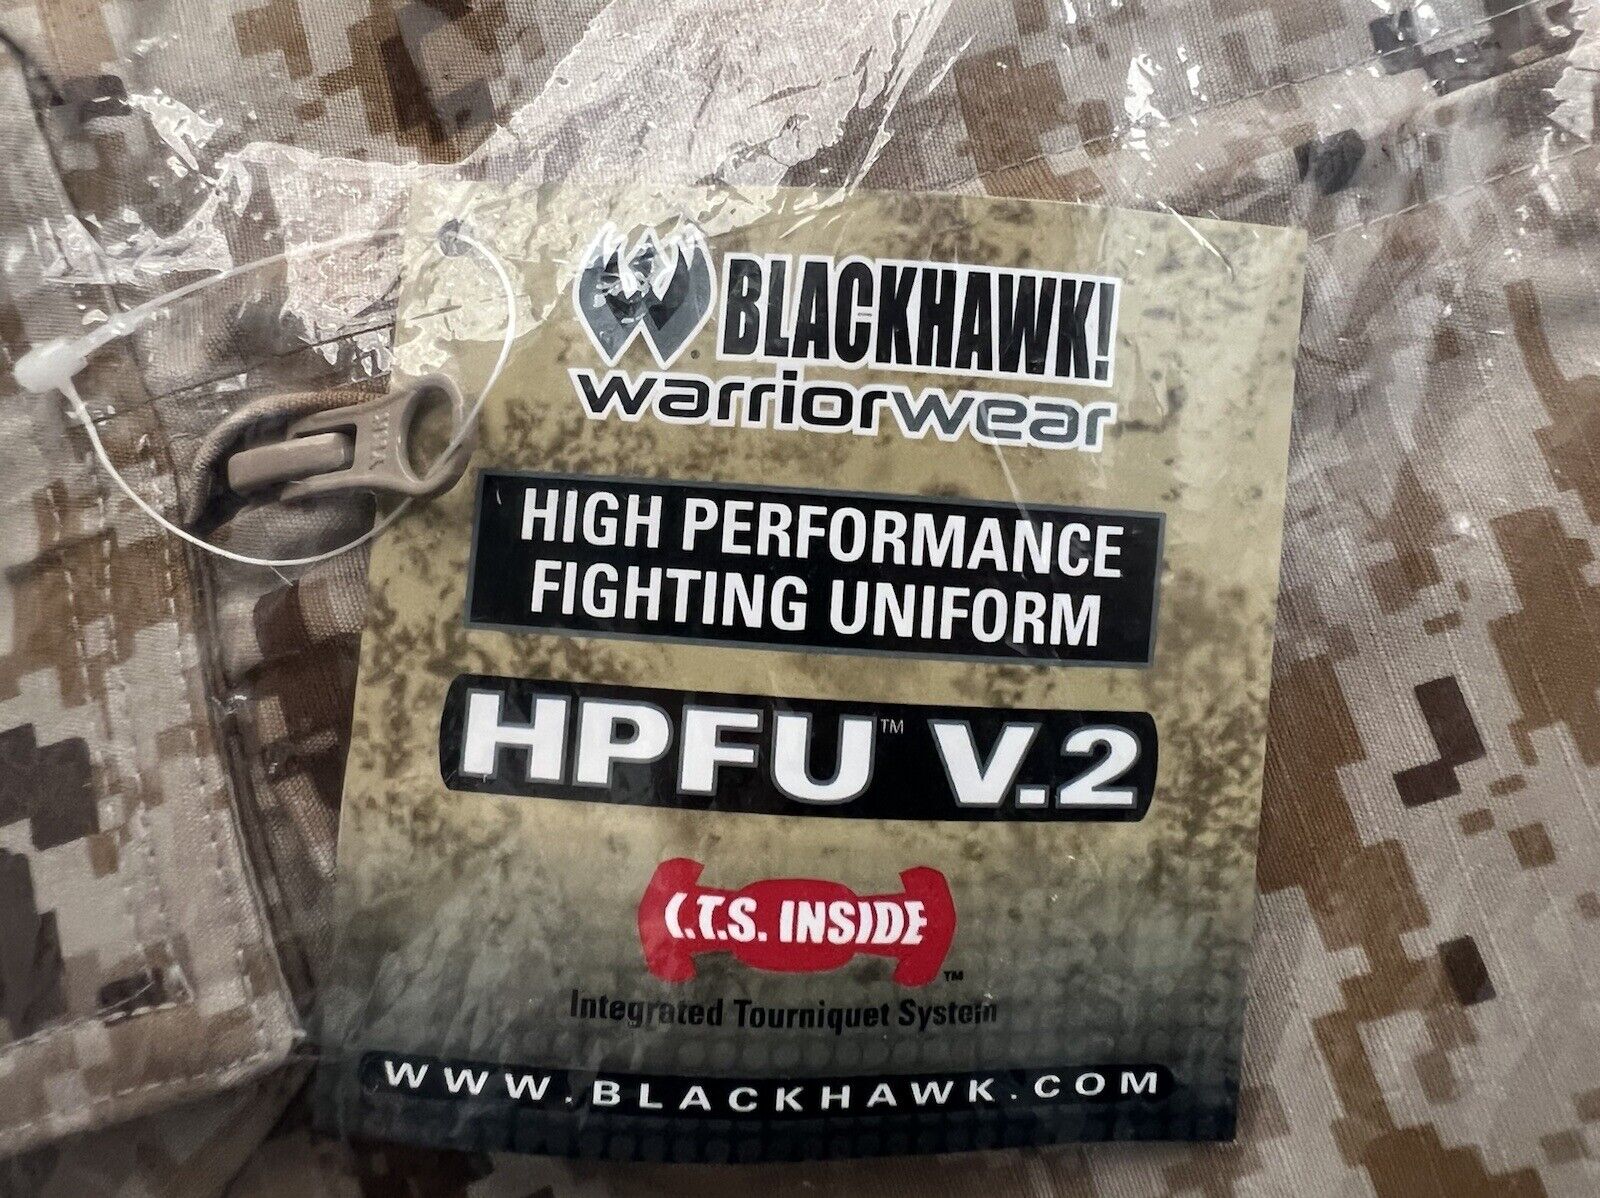 Blackhawk Warriorwear High Performance Uniform HPFU V.2 Large New in Bag Desert